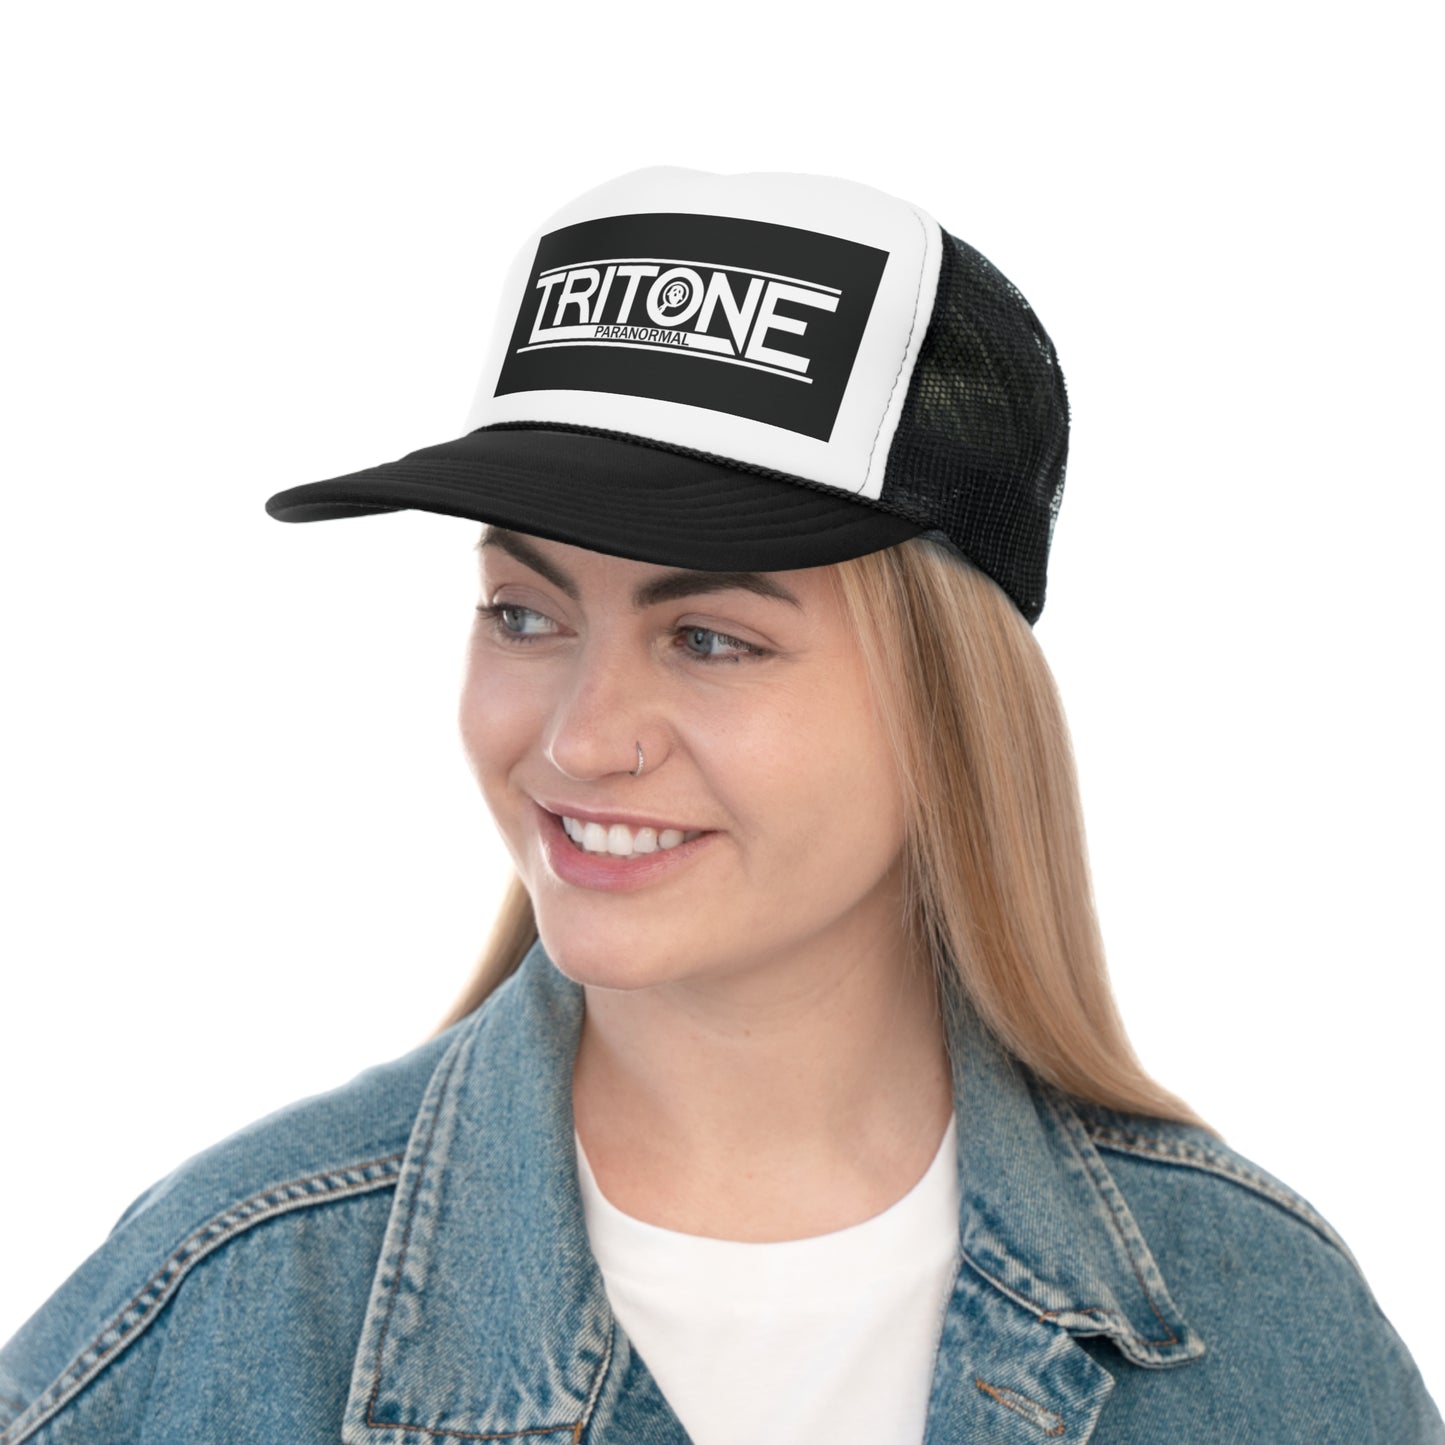 Tritone Paranormal Trucker Hat